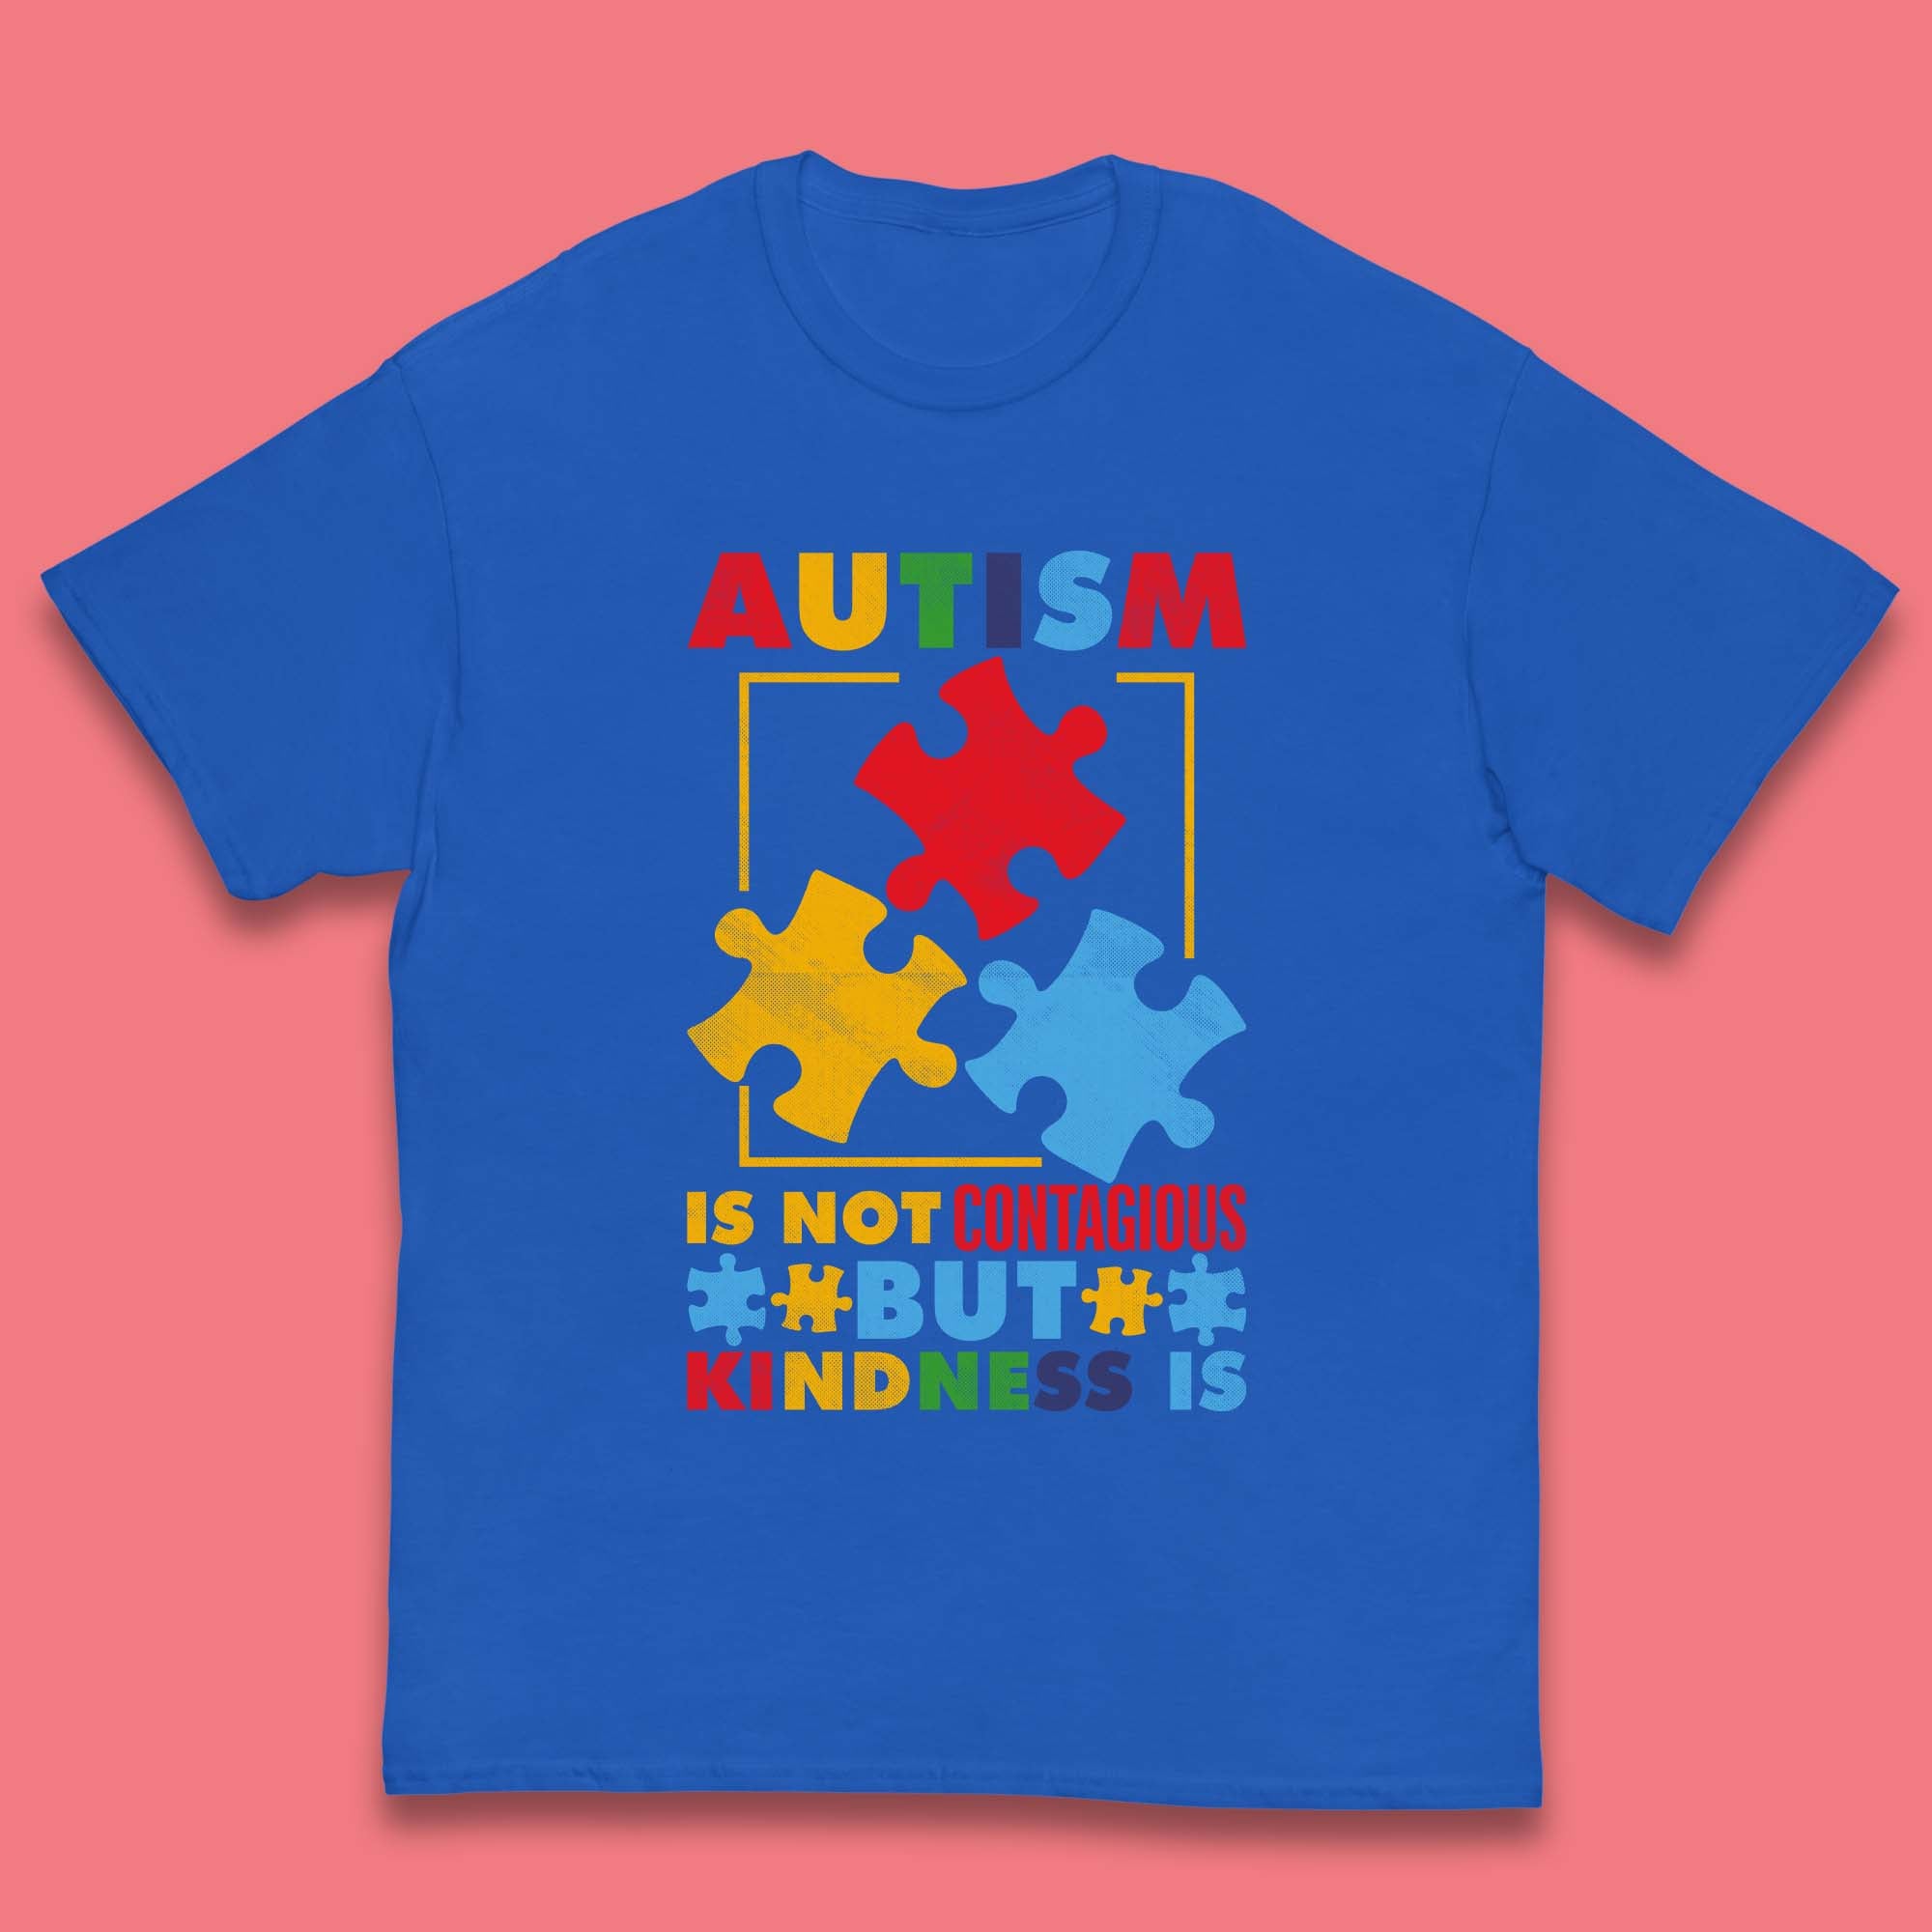 Autism Kindness Kids T-Shirt